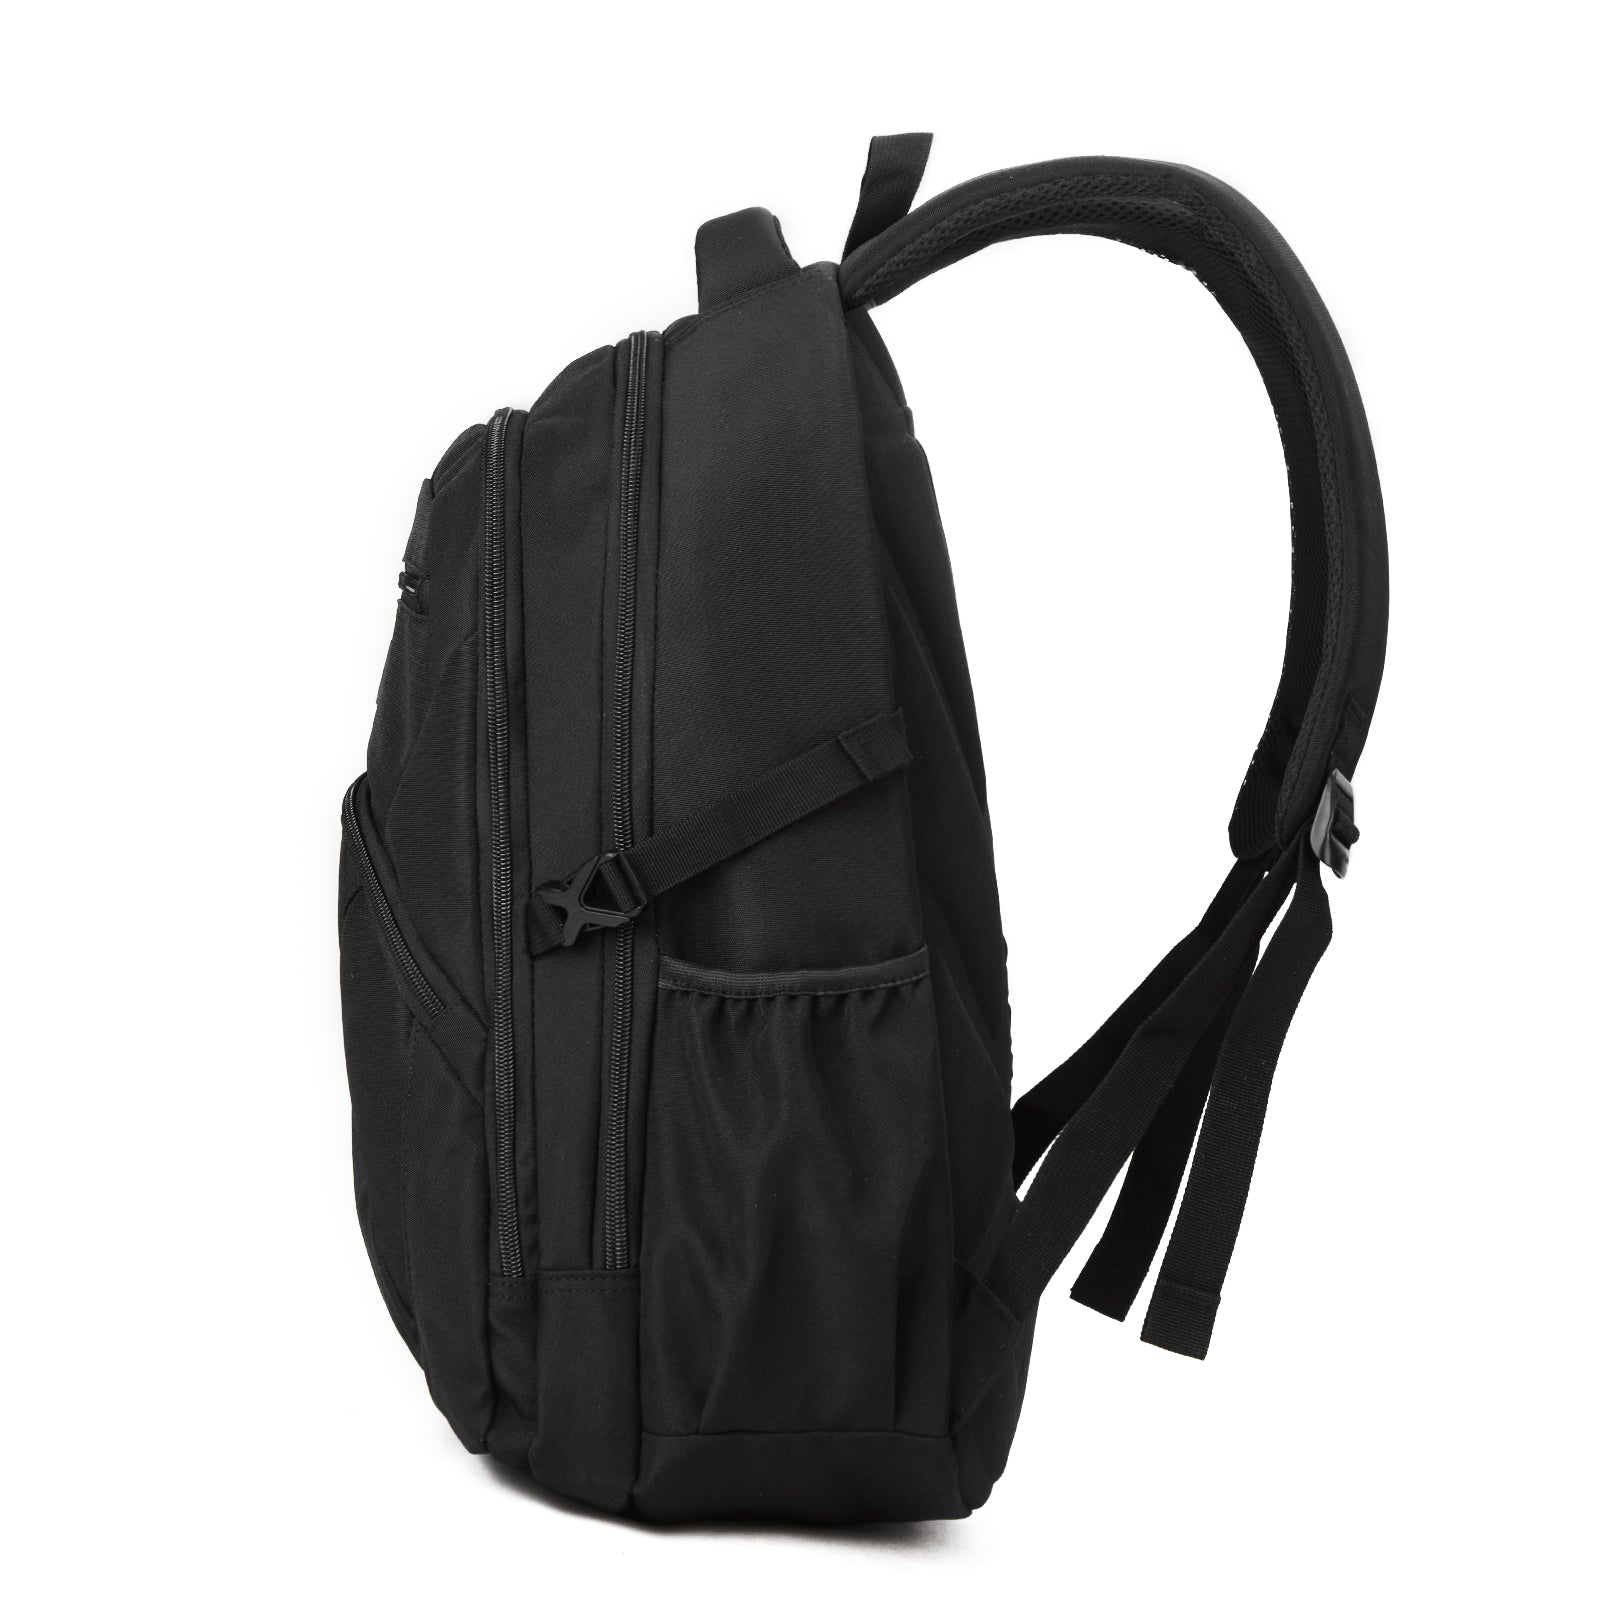 Aoking Travel Backpack SN2678 Black